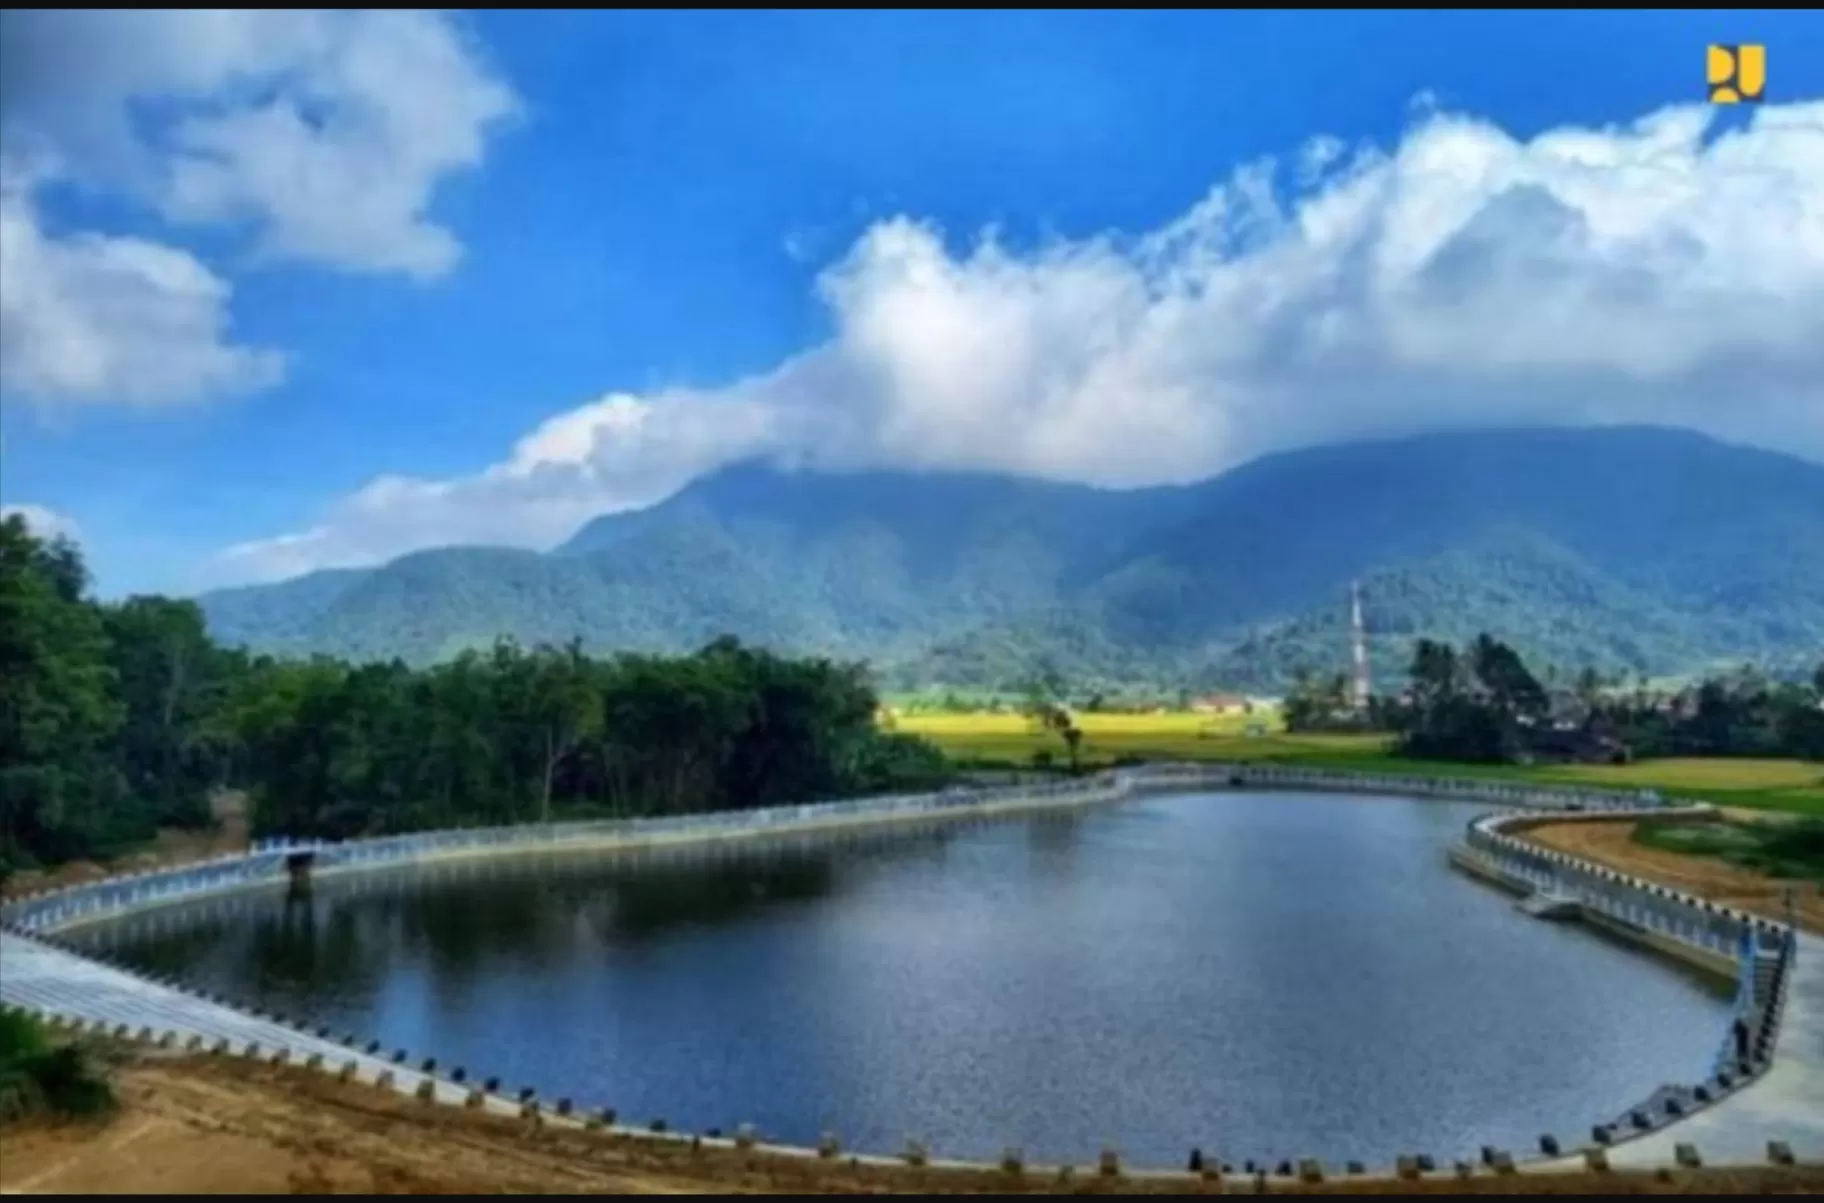 Selesai Dibangun Tahun 2023, Embung di Sumatera Barat Ini Tidak Hanya Dijadikan Sebagai Pasokan Air Tapi Juga Menjadi Tempat Wisata Baru, Namanya...